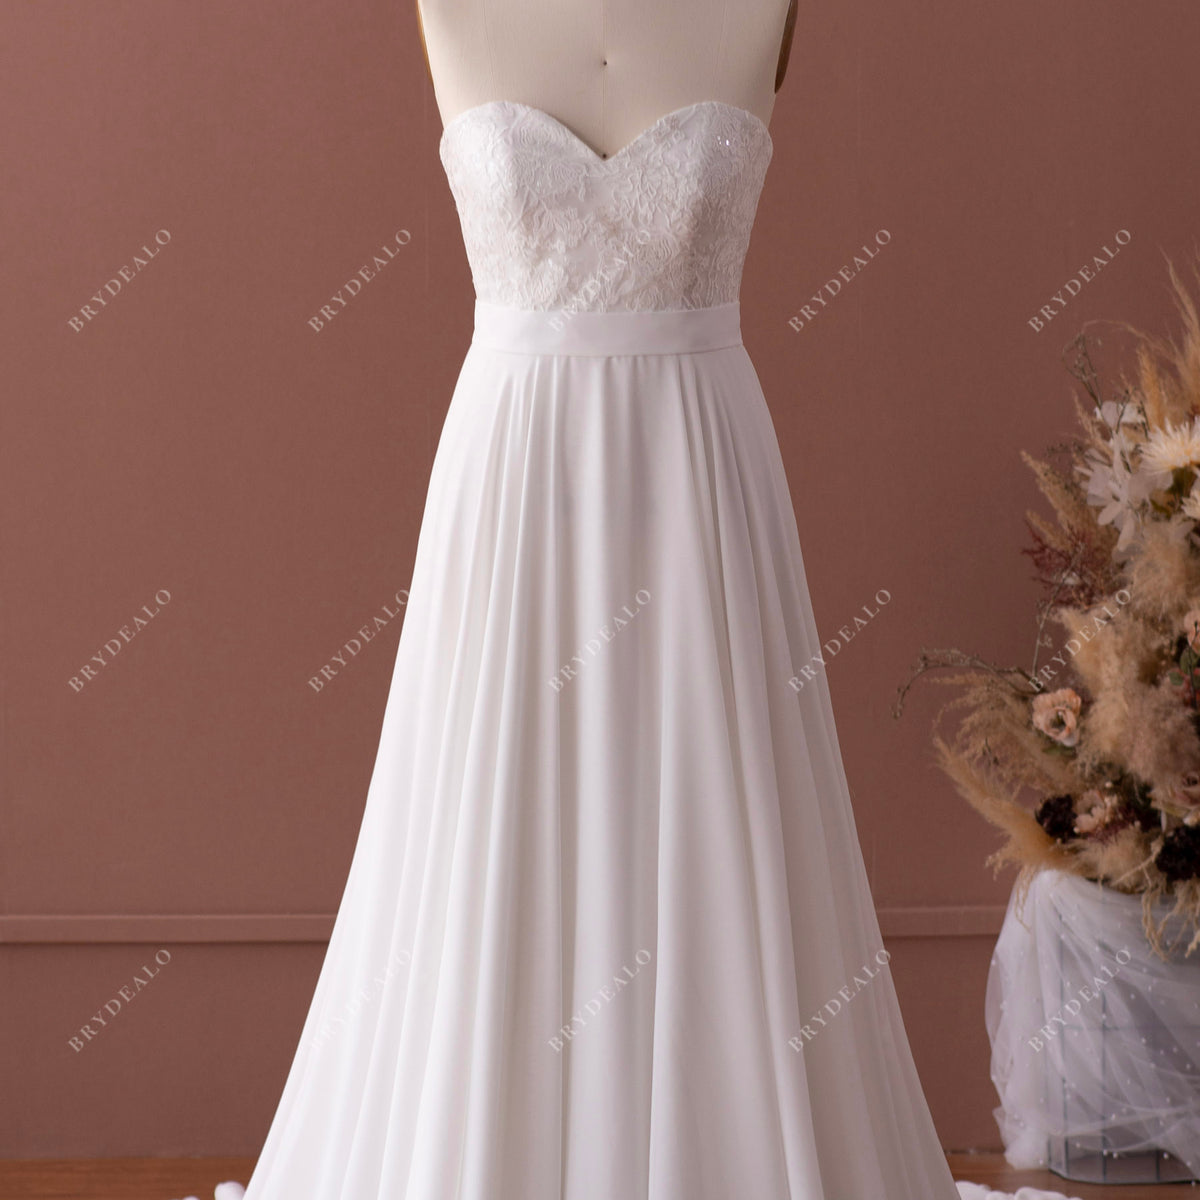 MSMNGZD Sweetheart Wedding Dress for Bride A Line Chiffon Long